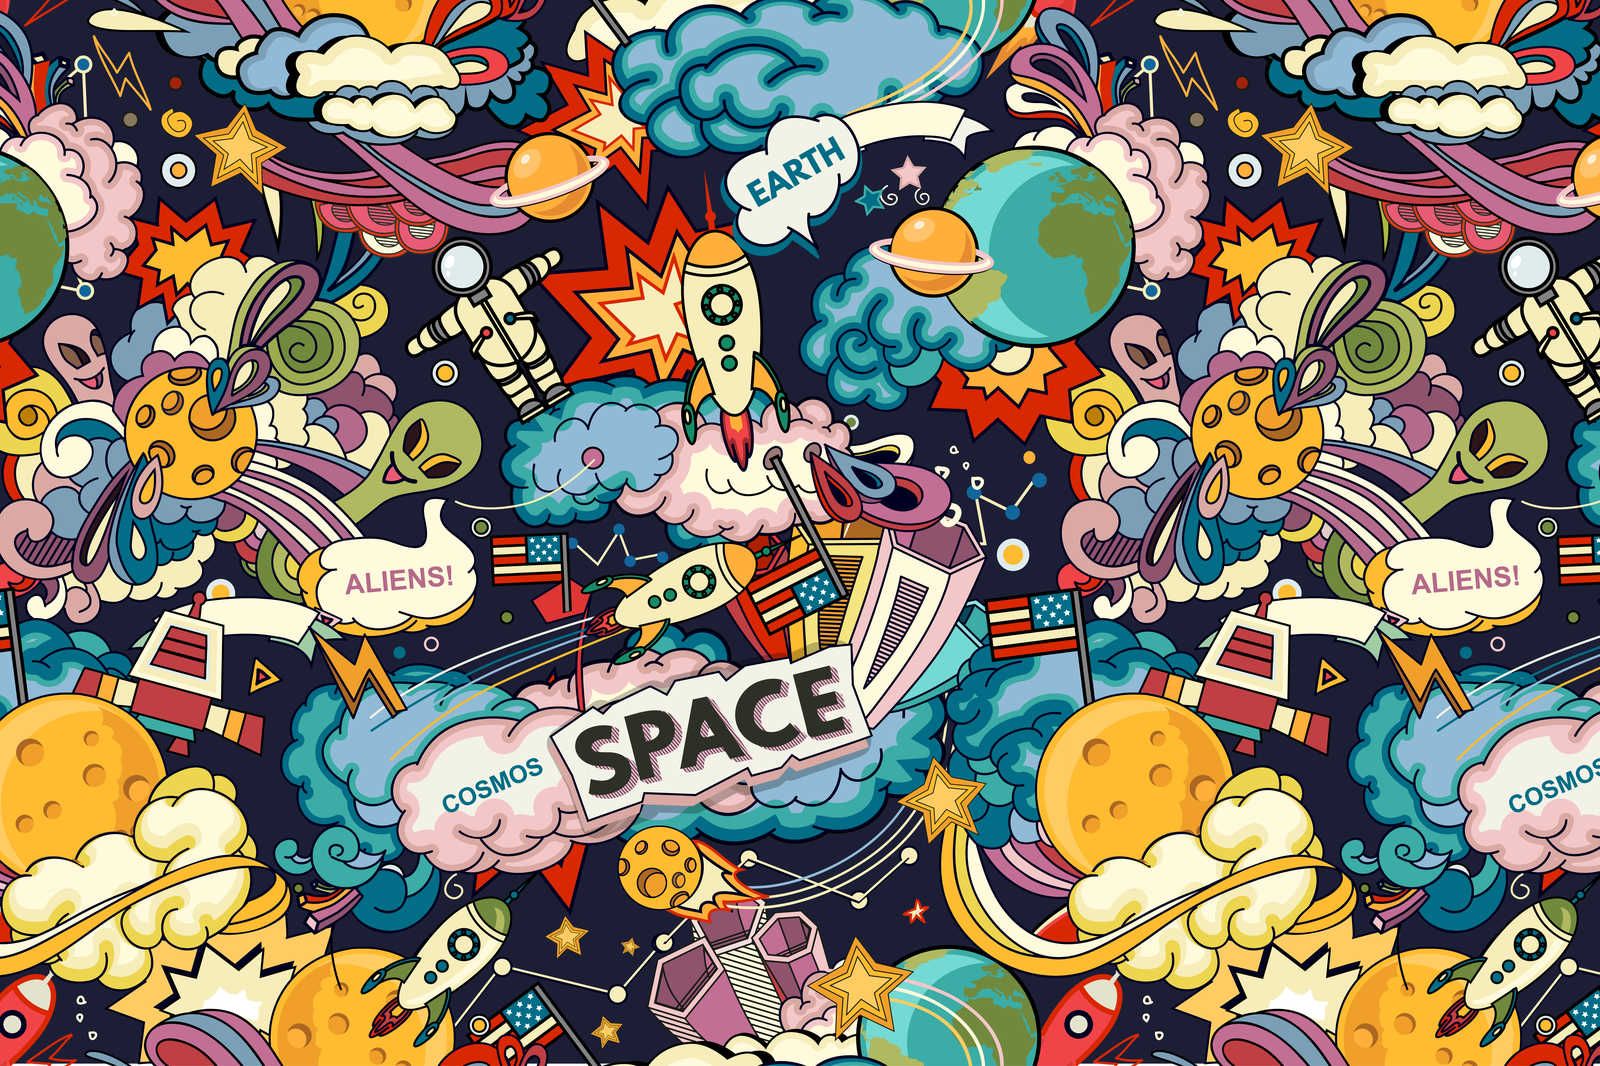             Canvas Universe Collage in Comic Style - 90 cm x 60 cm
        